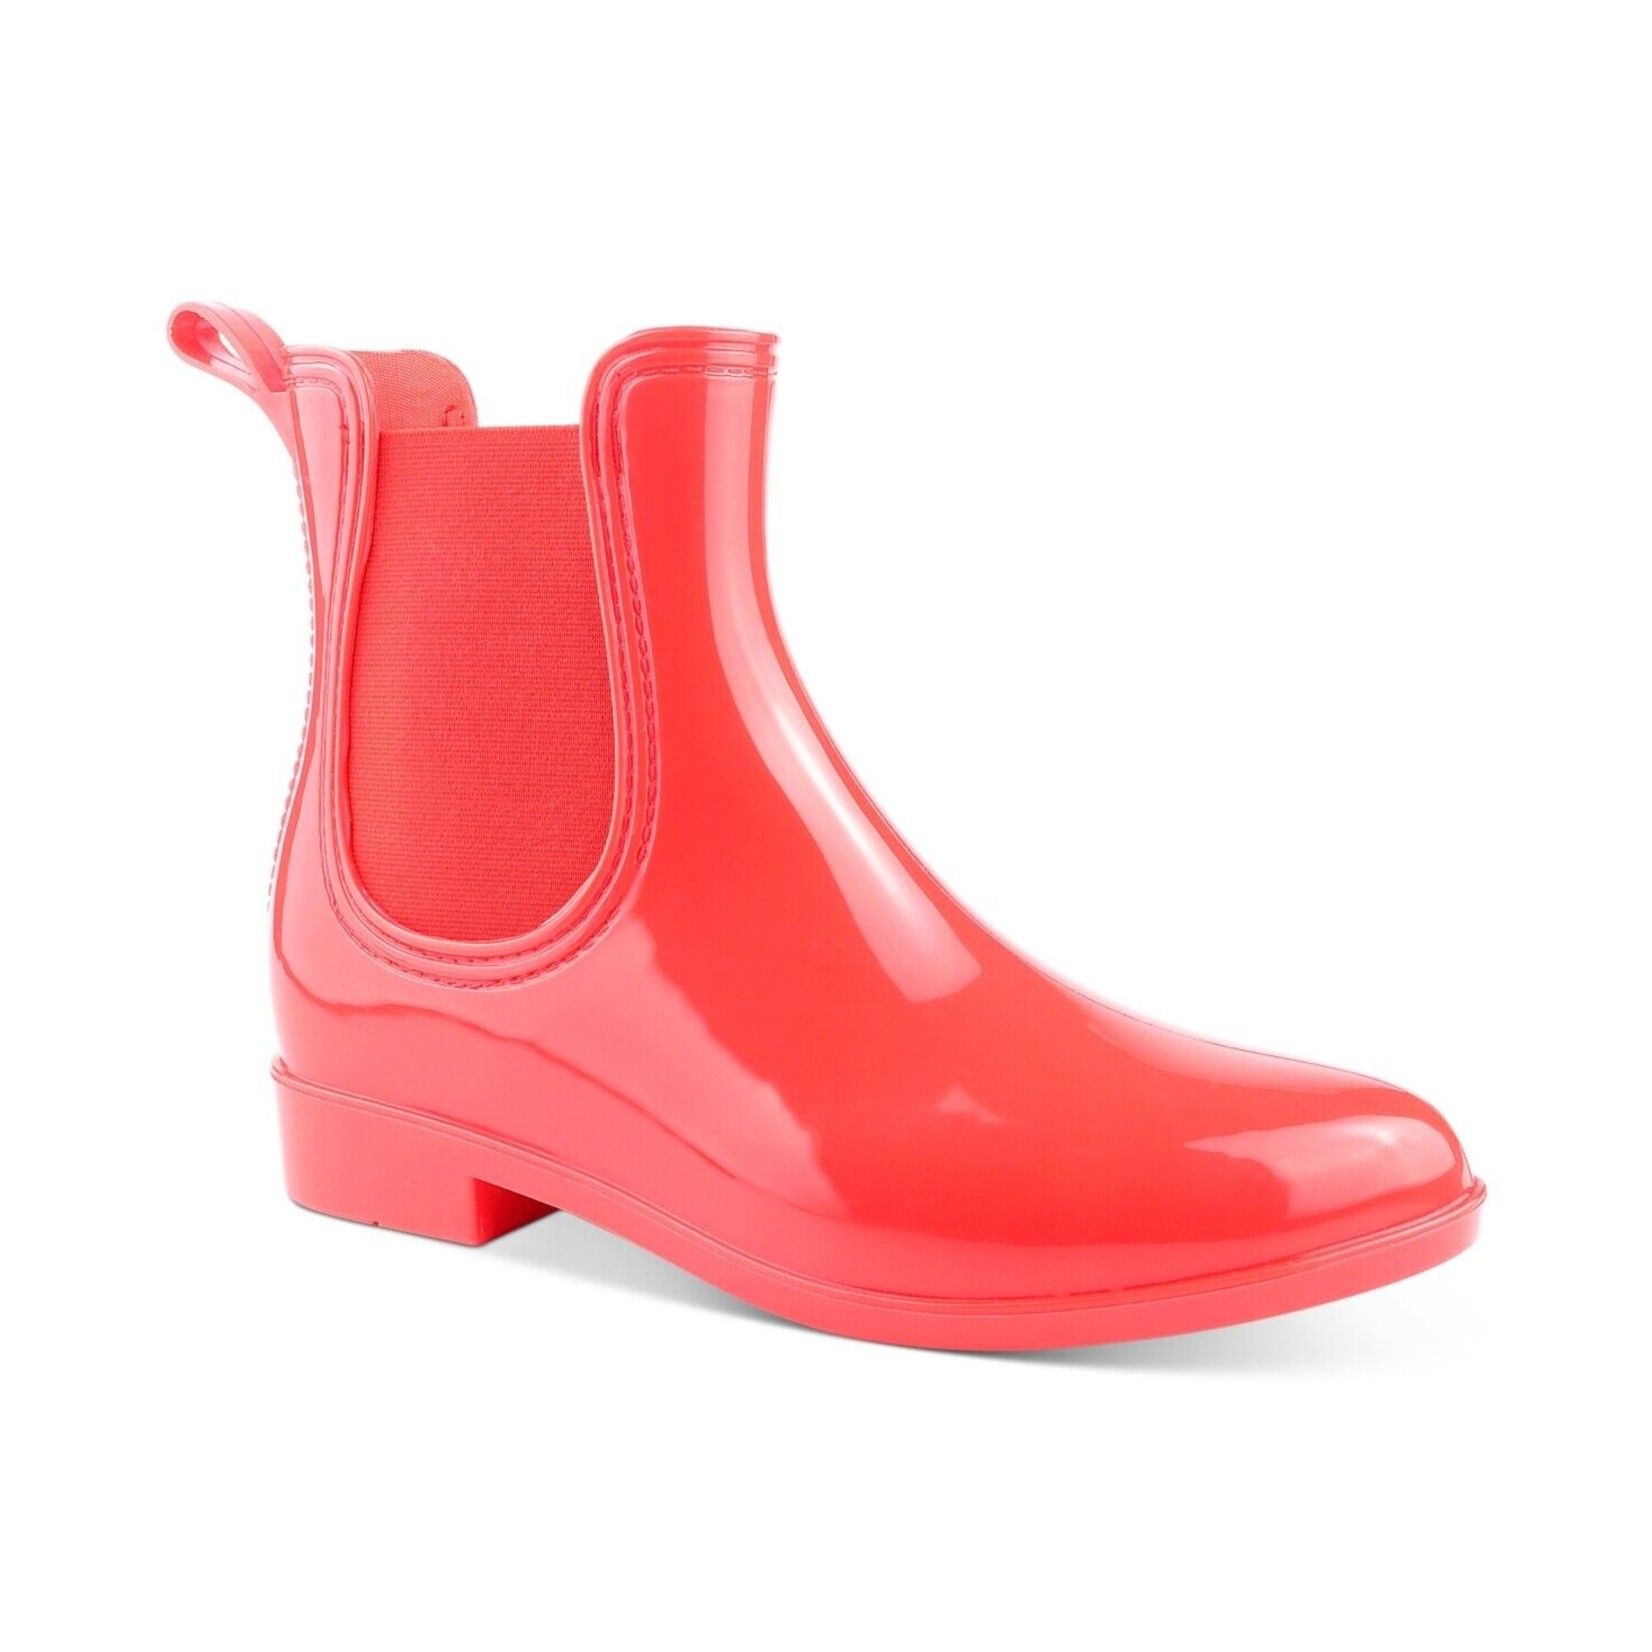 INC INC International Concepts Women's Rain Boots, 7